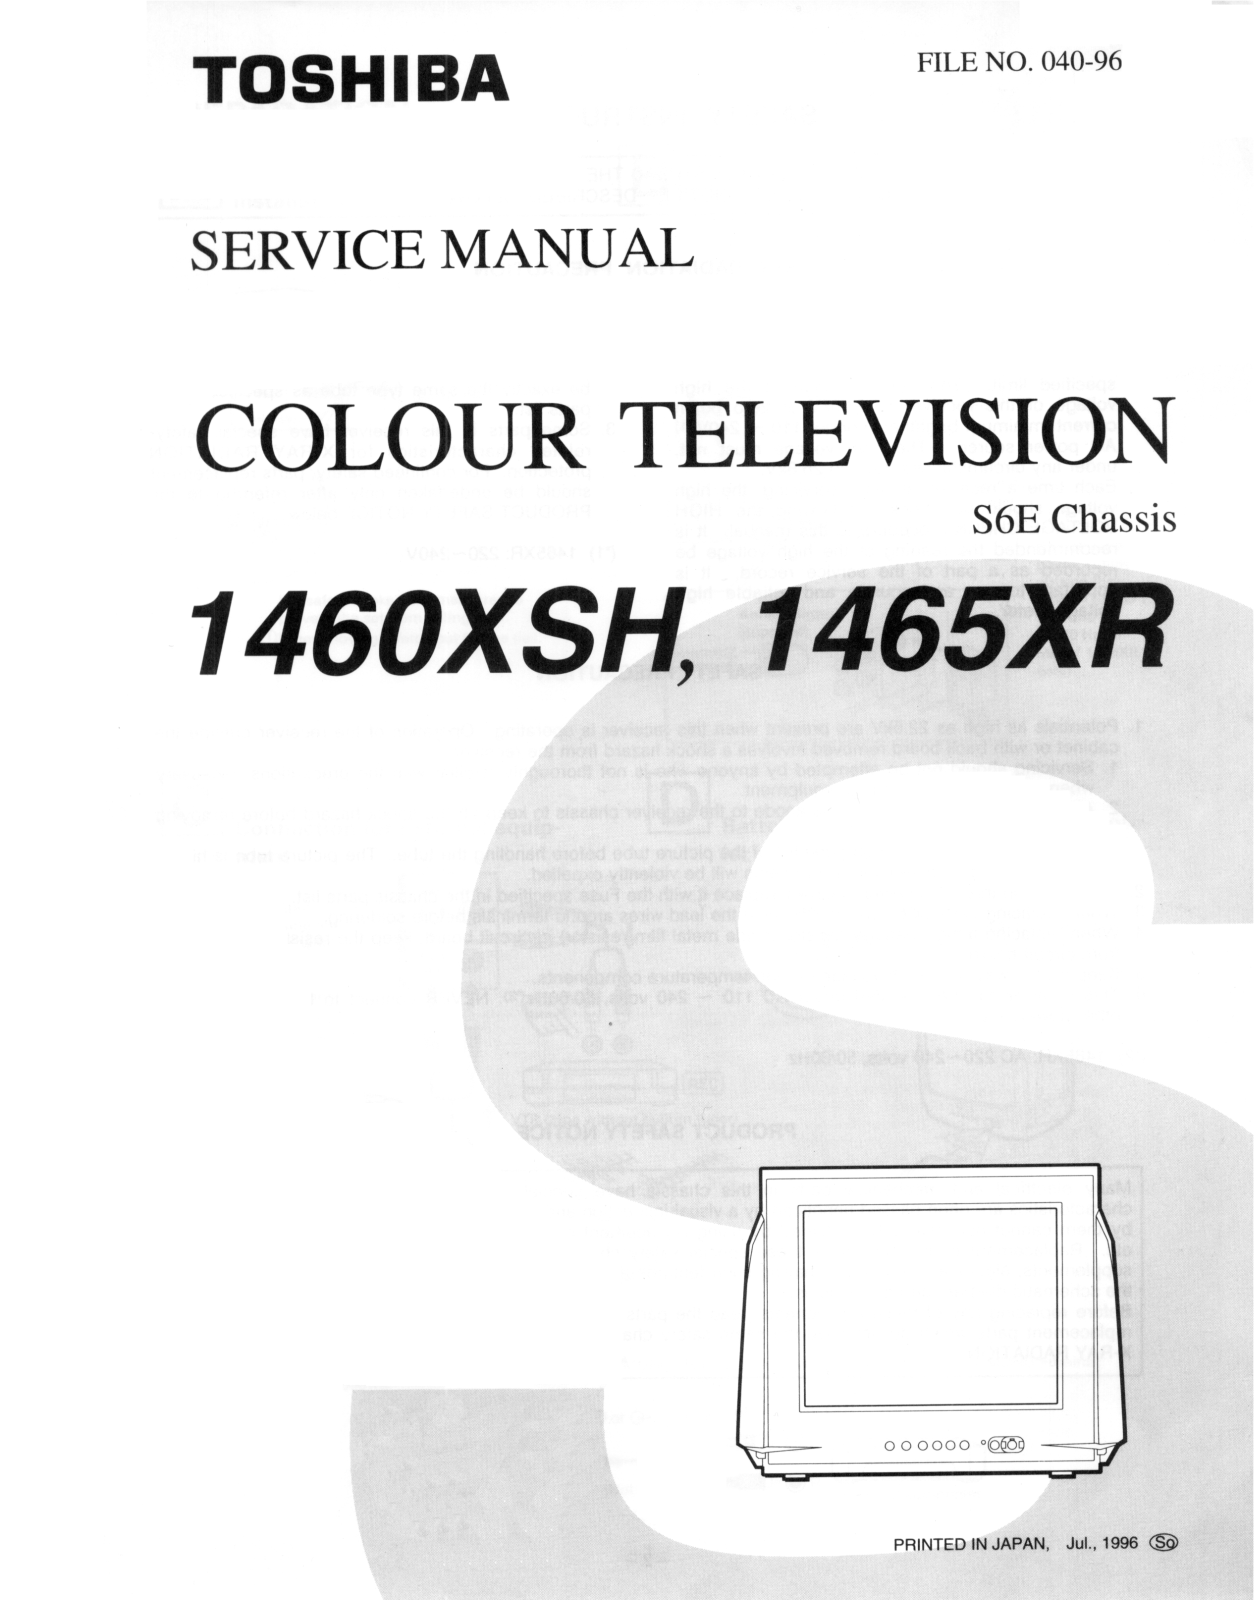 Toshiba 1460XSH, 1465XR Service Manual